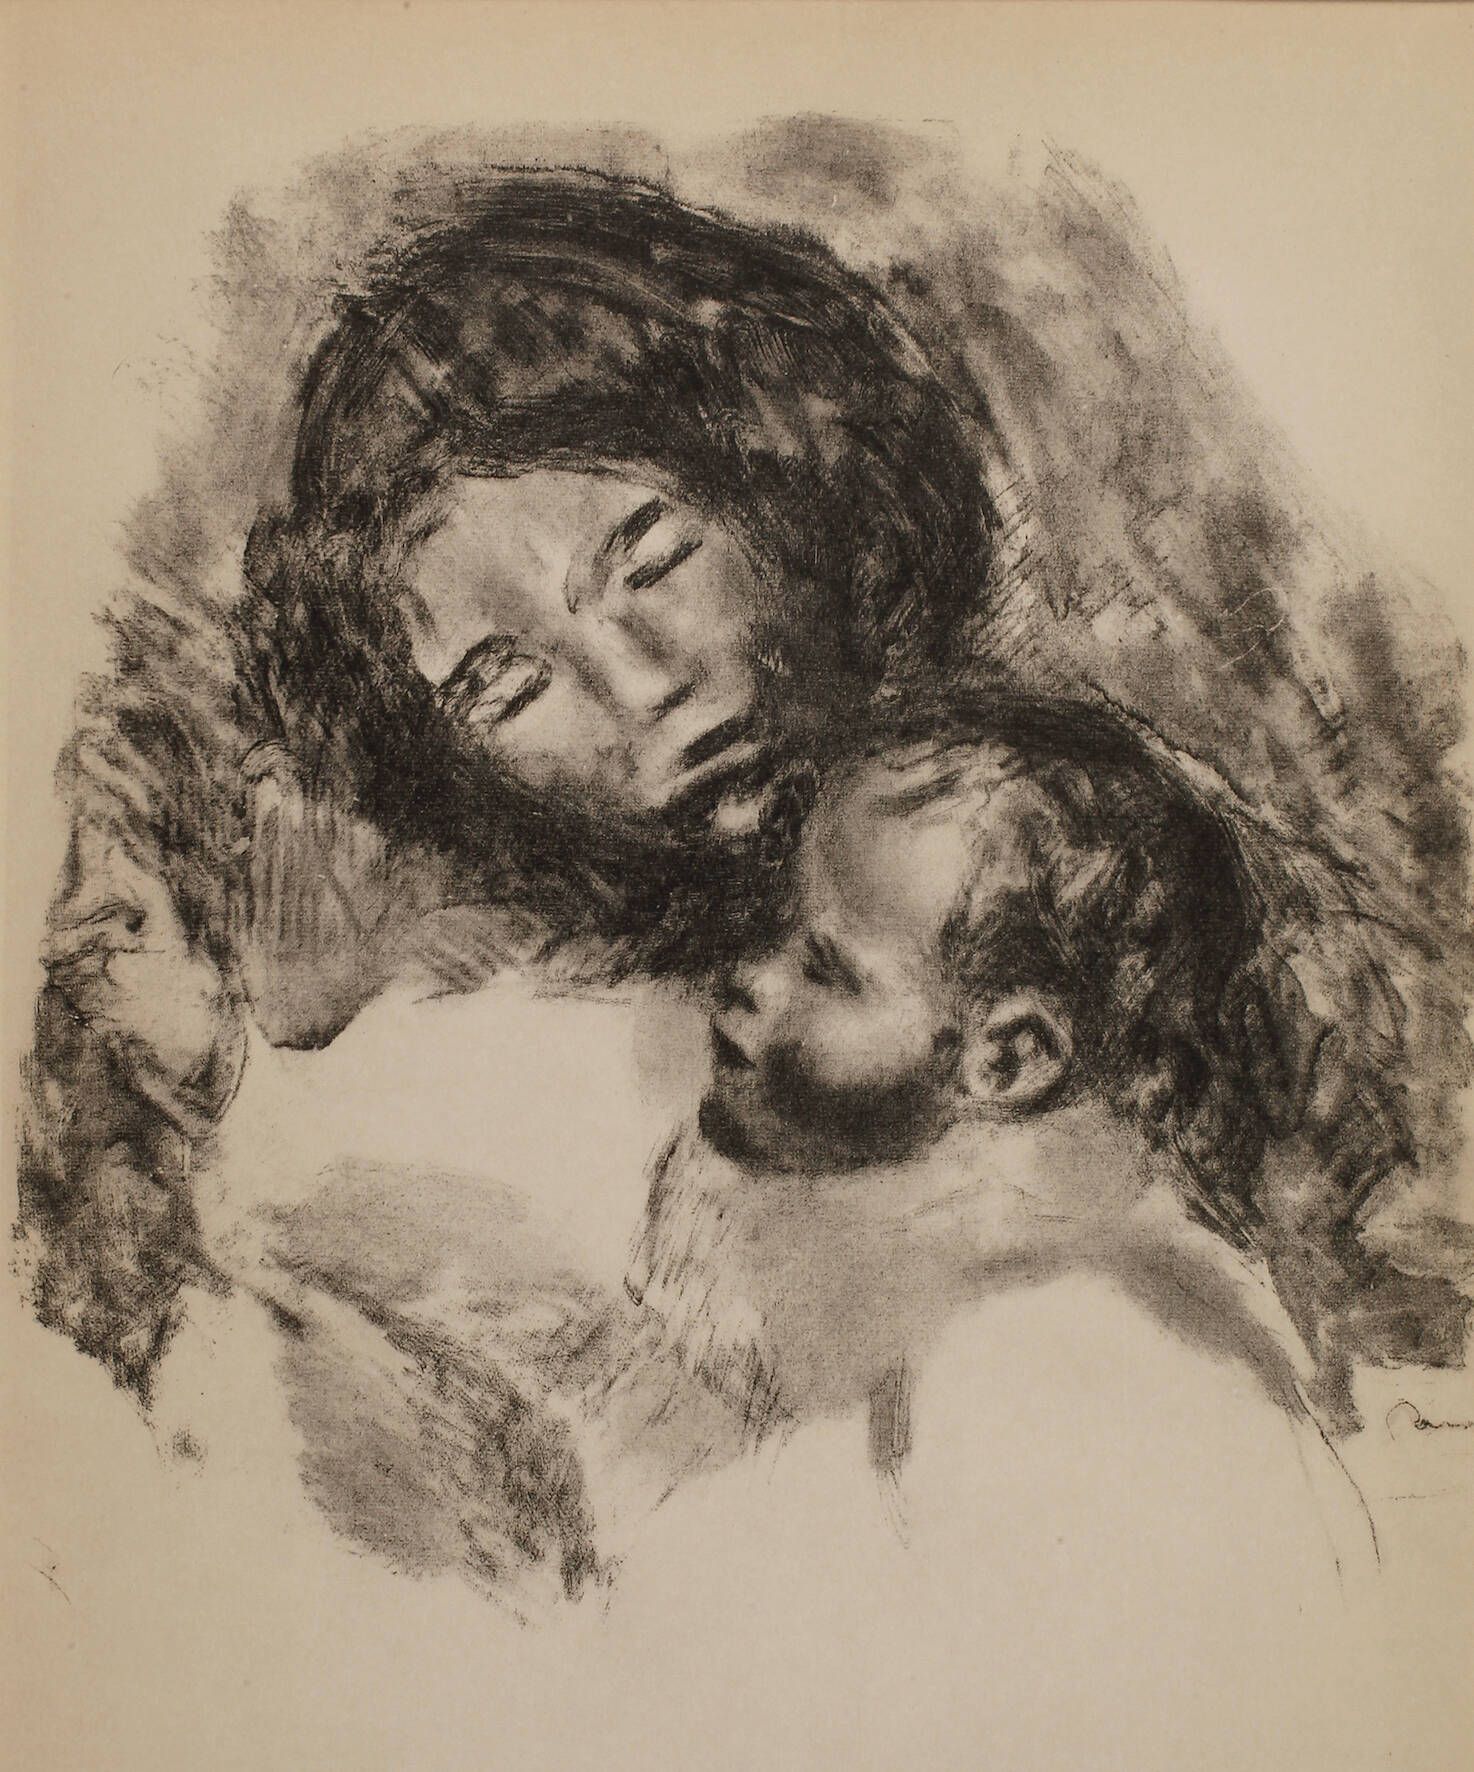 nach Auguste Renoir, "Maternité"